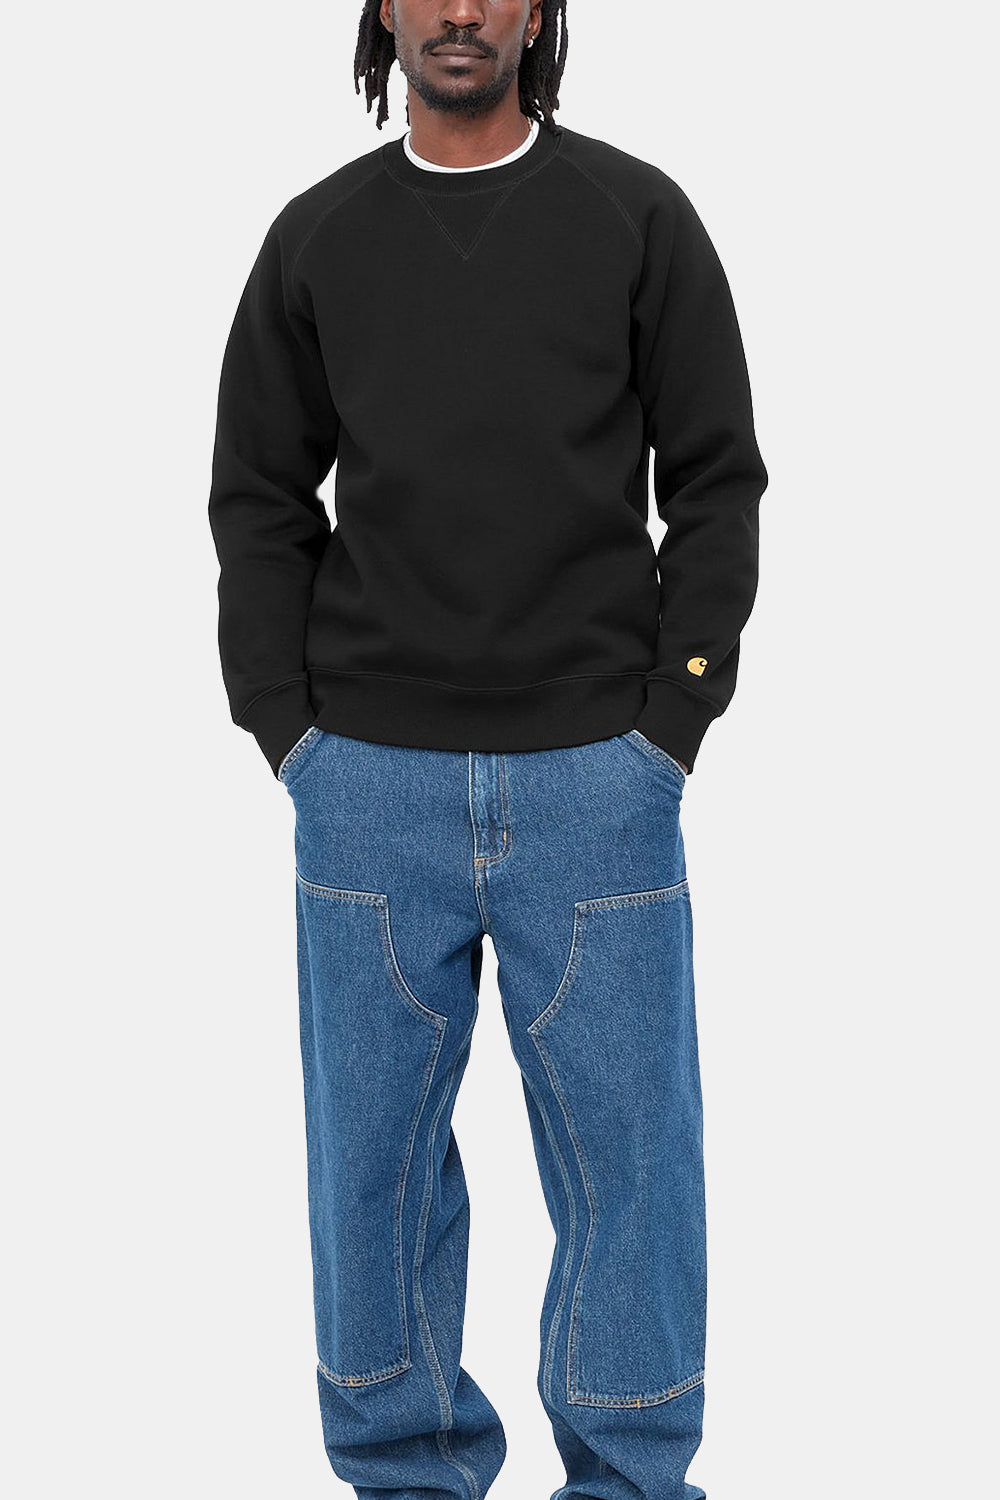 Carhartt WIP Chase Heavy Sweatshirt (Black & Gold)